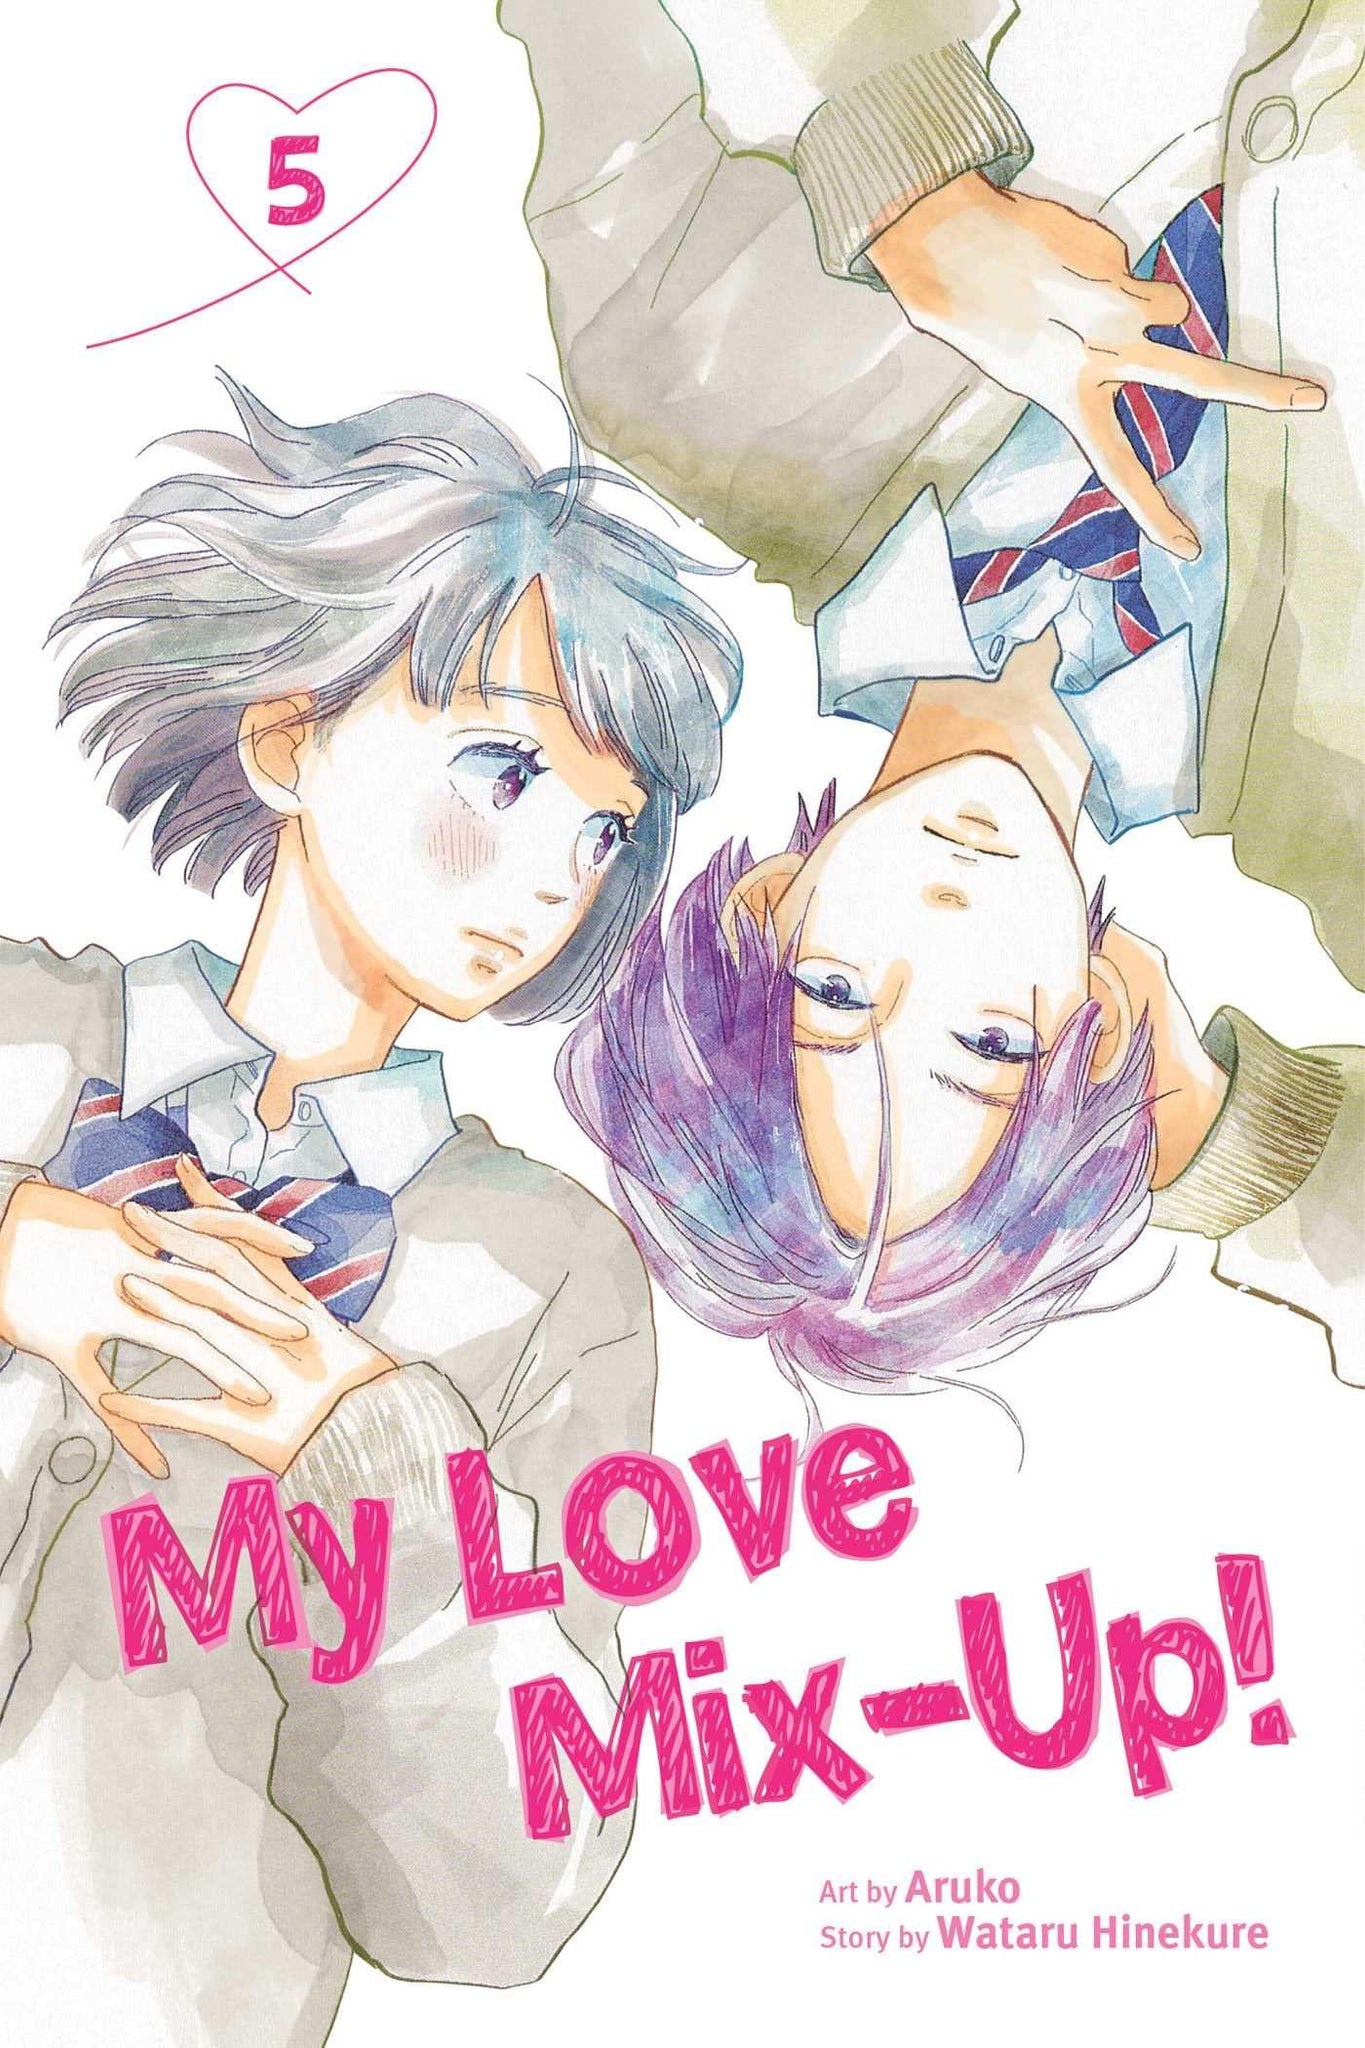 Tomo-chan is a Girl! Manga Volume 5 [RARE]